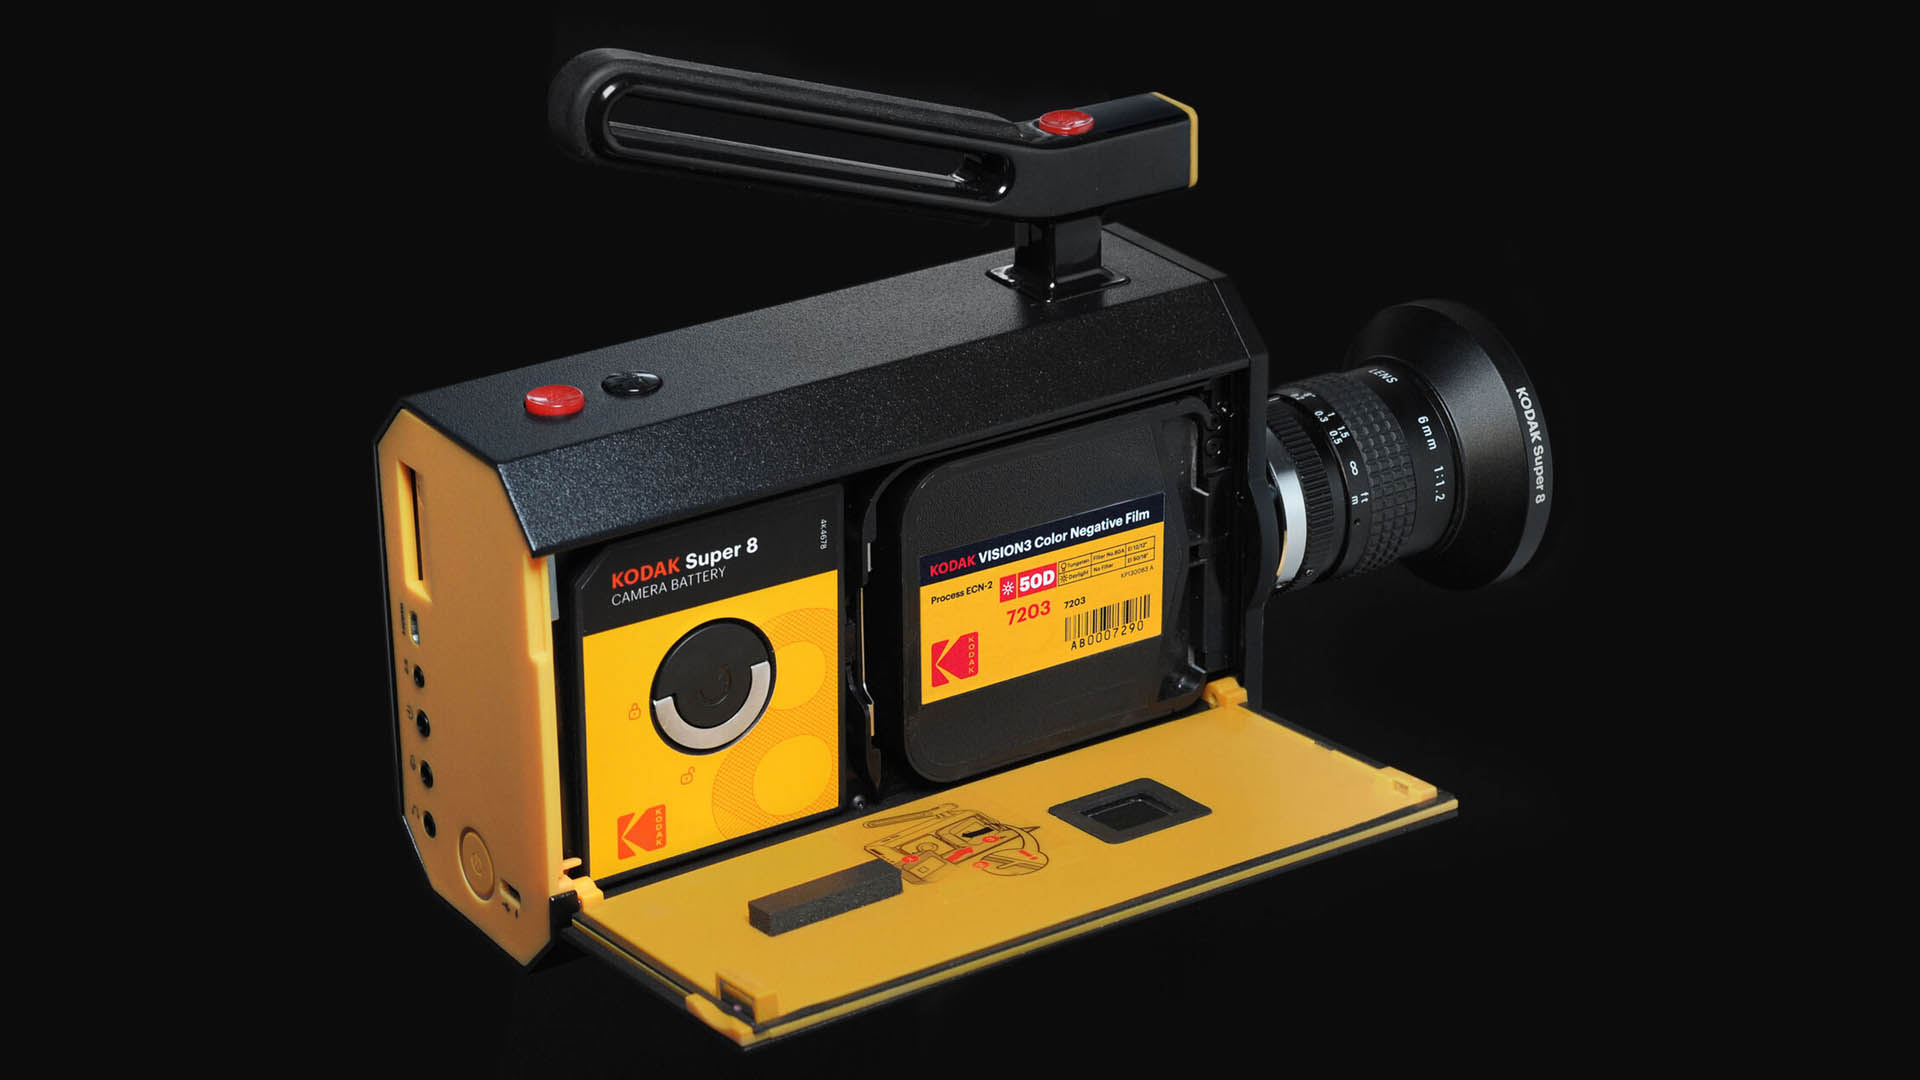 Kodak Super 8 Camera Revived - At More than 10 Times Its Original